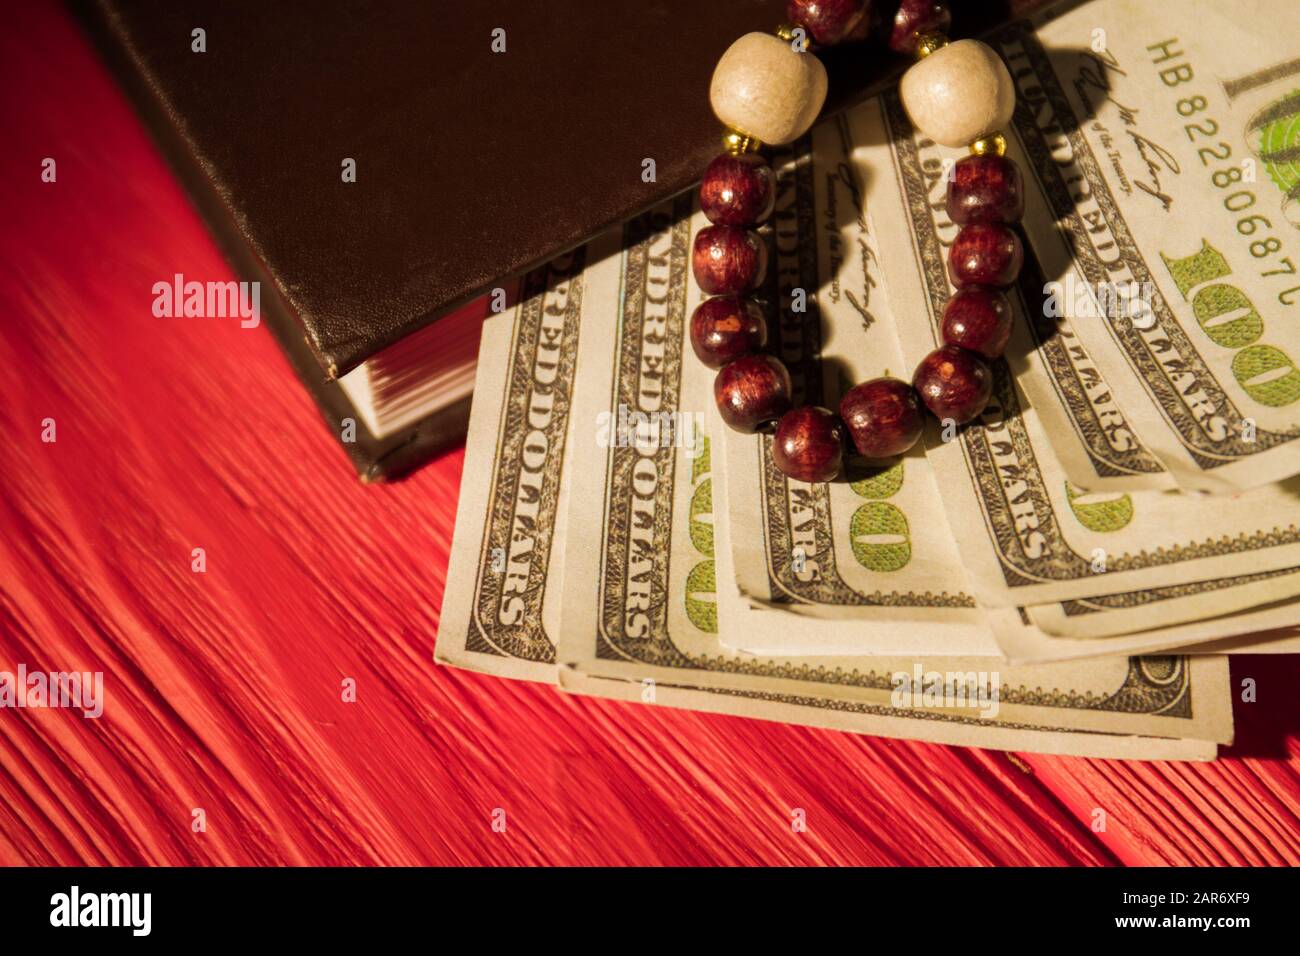 Prayer rosary beads, bible and money. Stock Photo